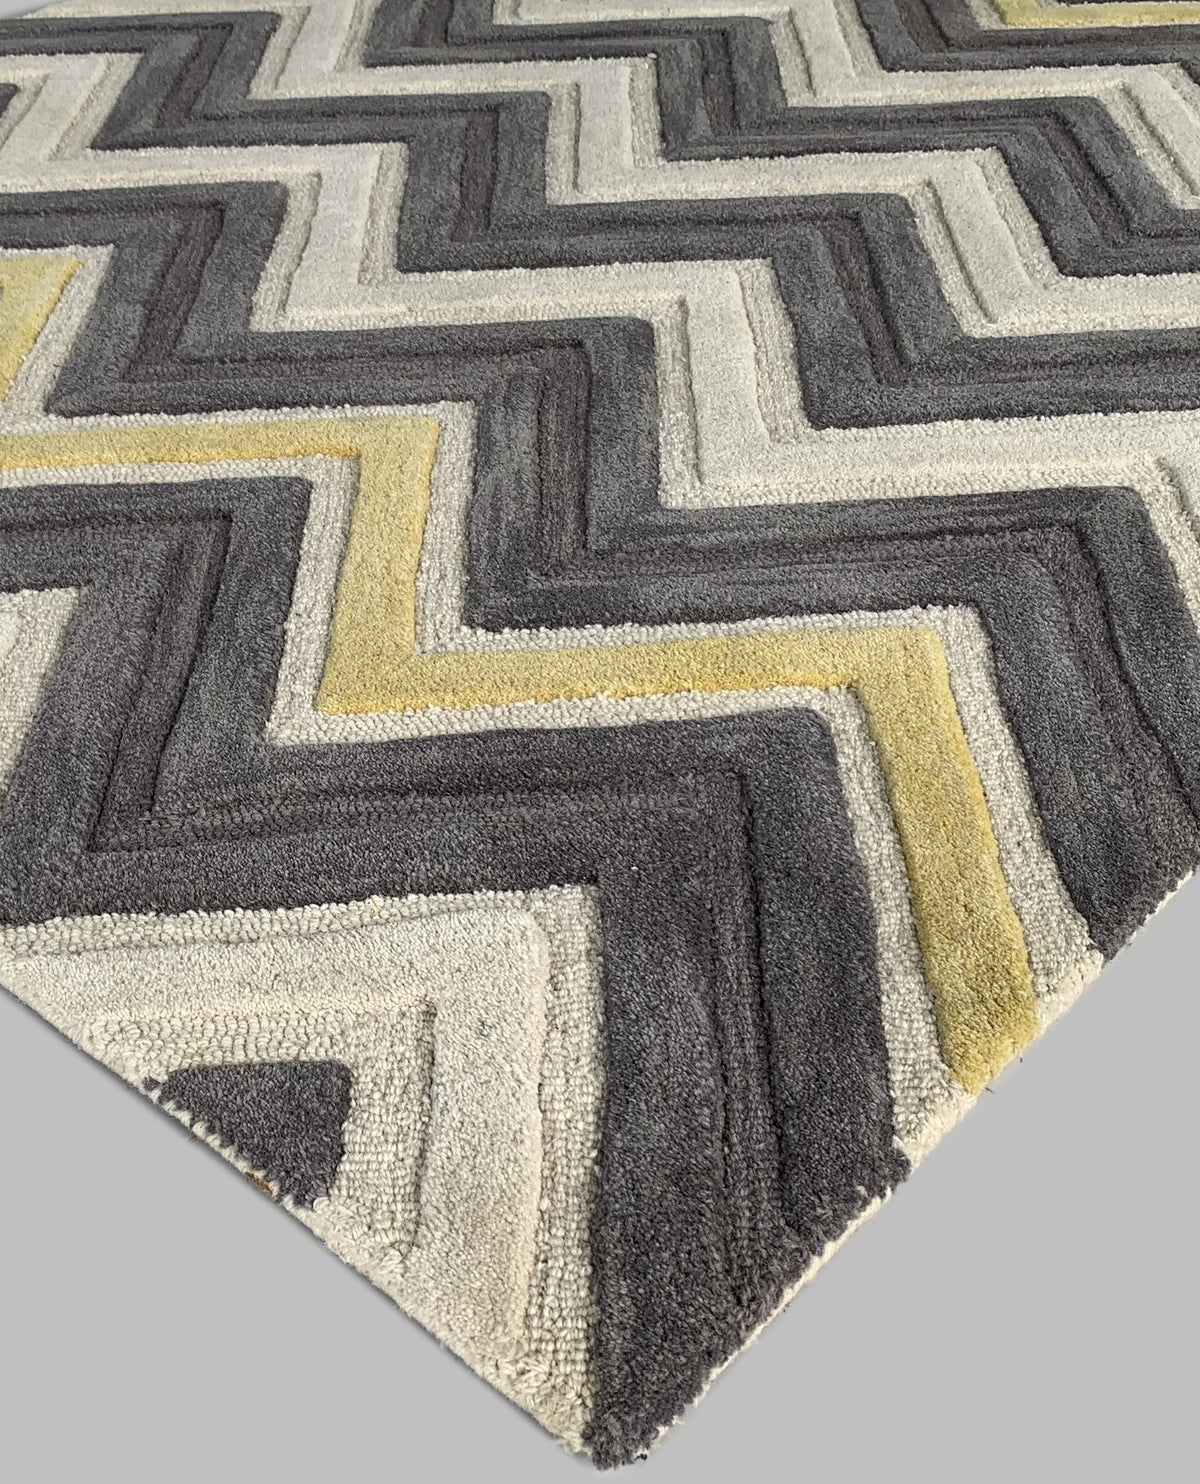 Rugslane Grey & White Color Modern Carpet 5.0ft X 7.5ft